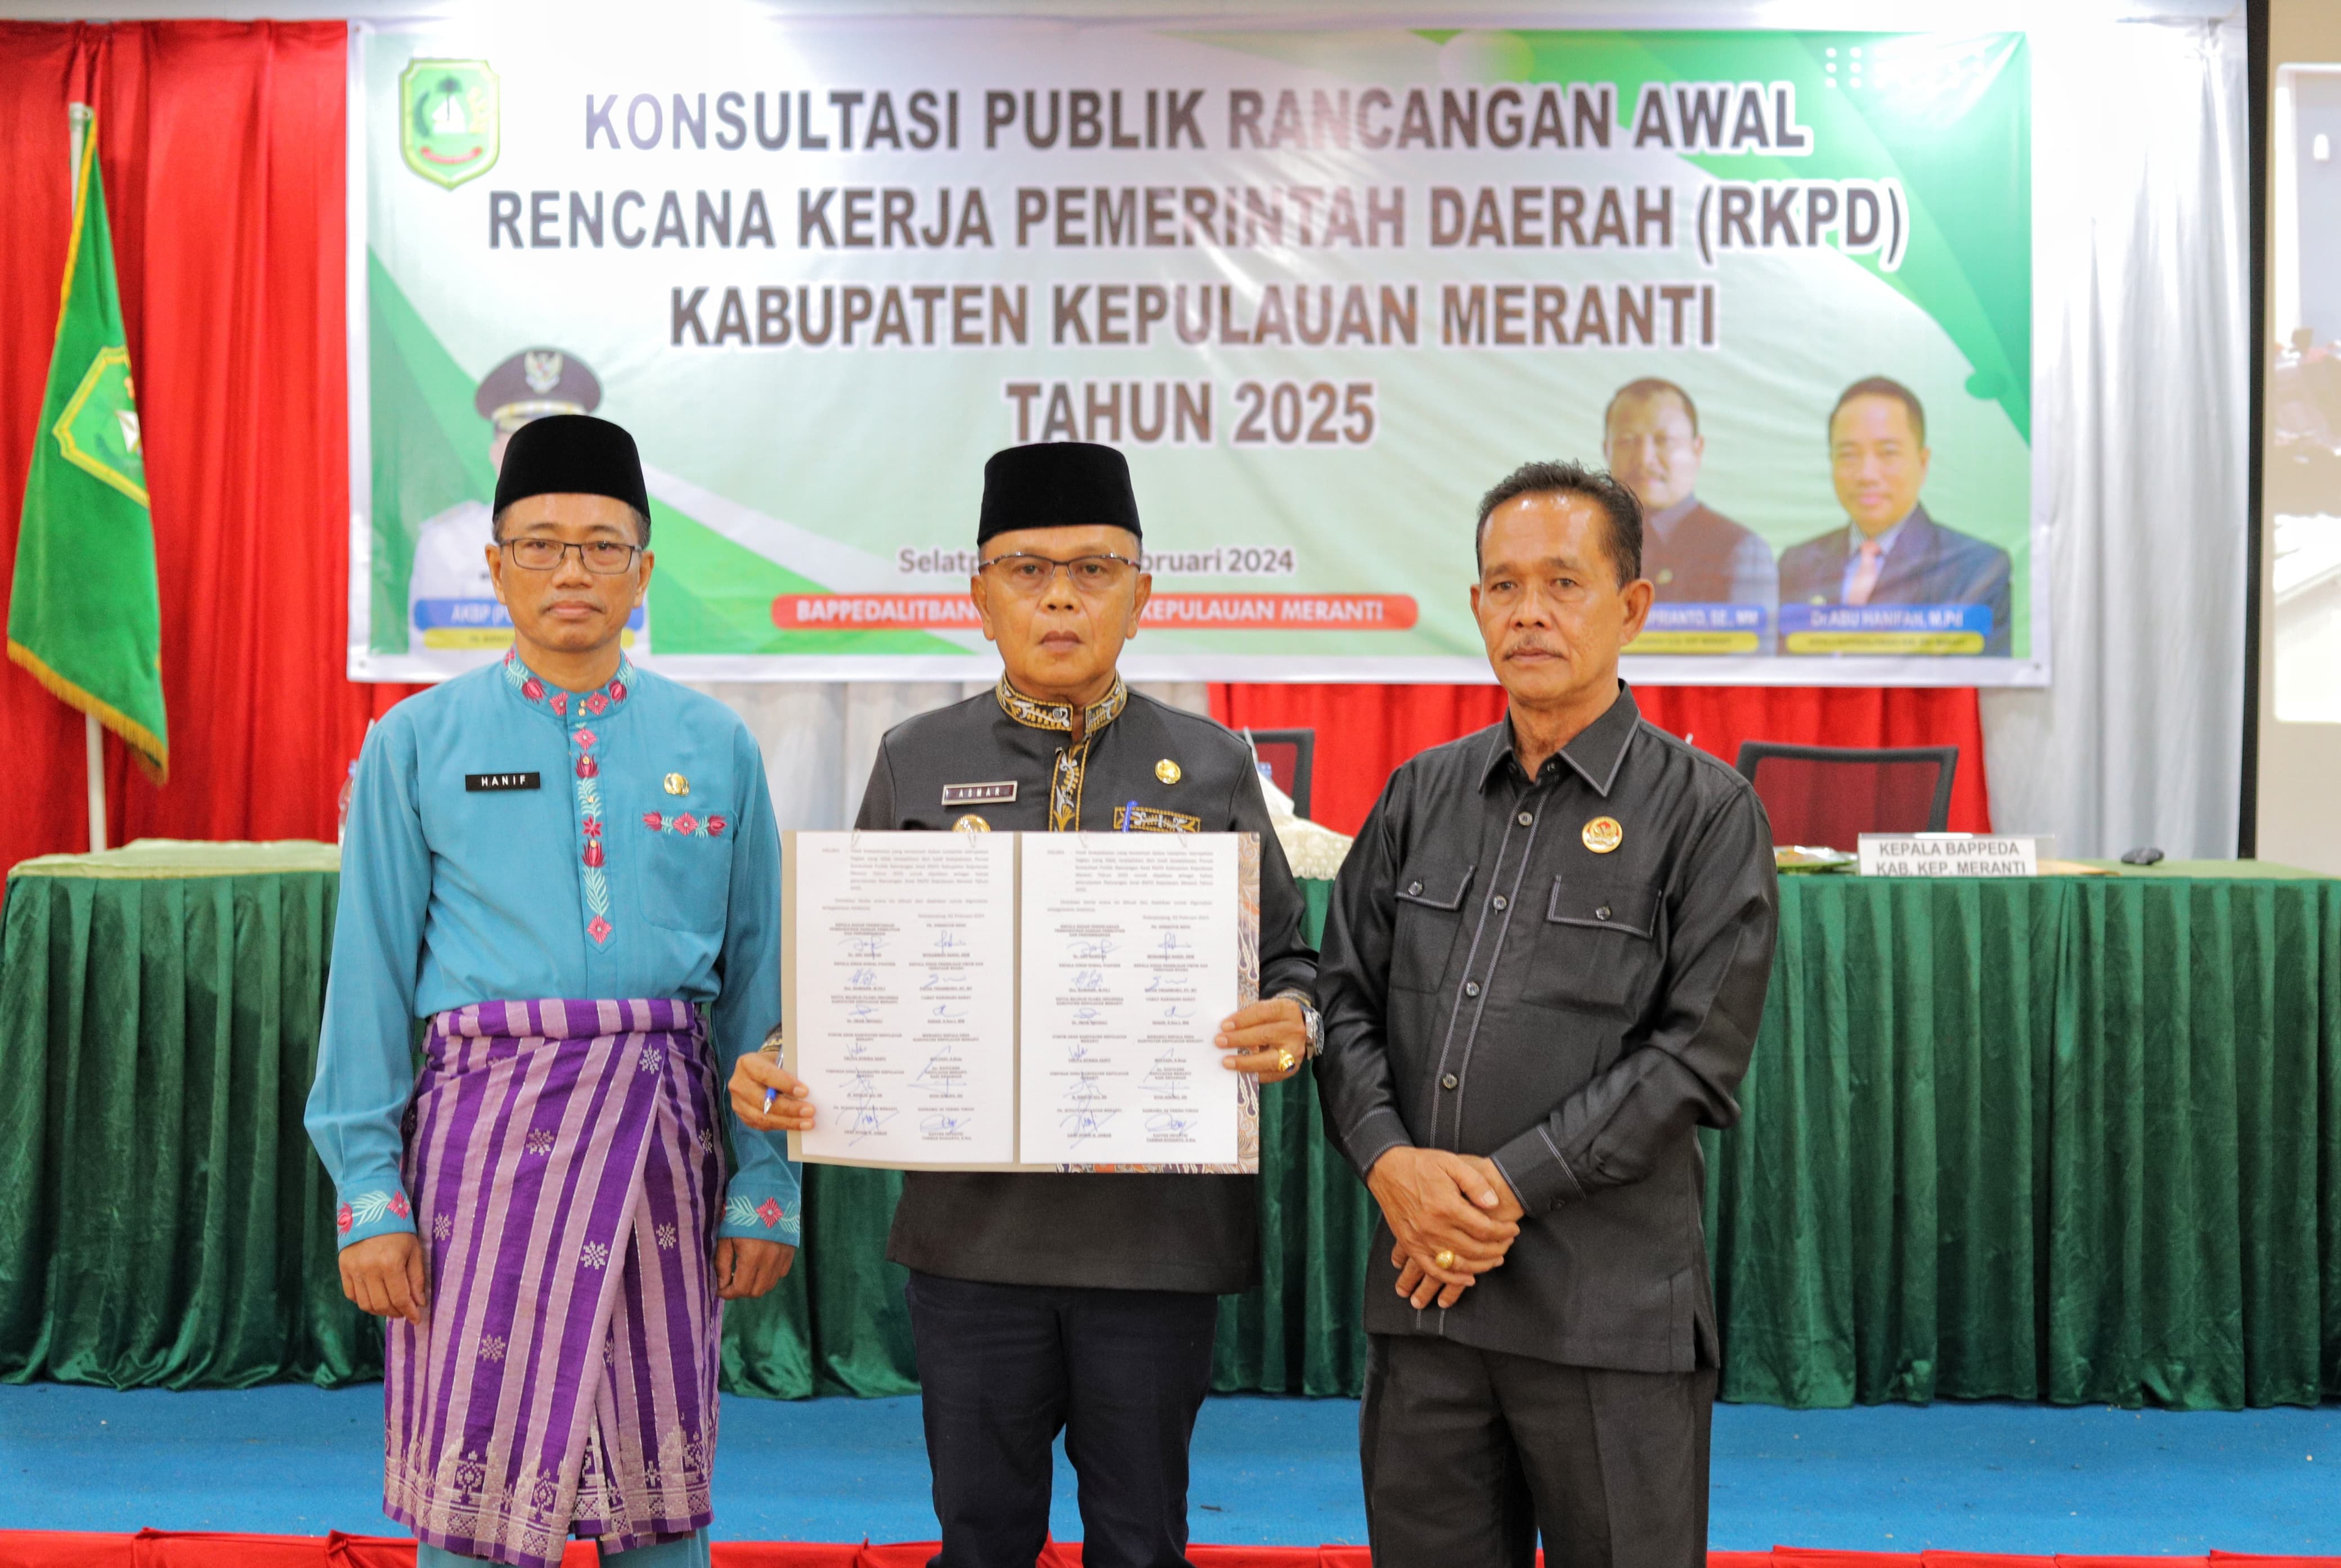 Konsultasi publik rancangan awal RKPD Pemkab Meranti